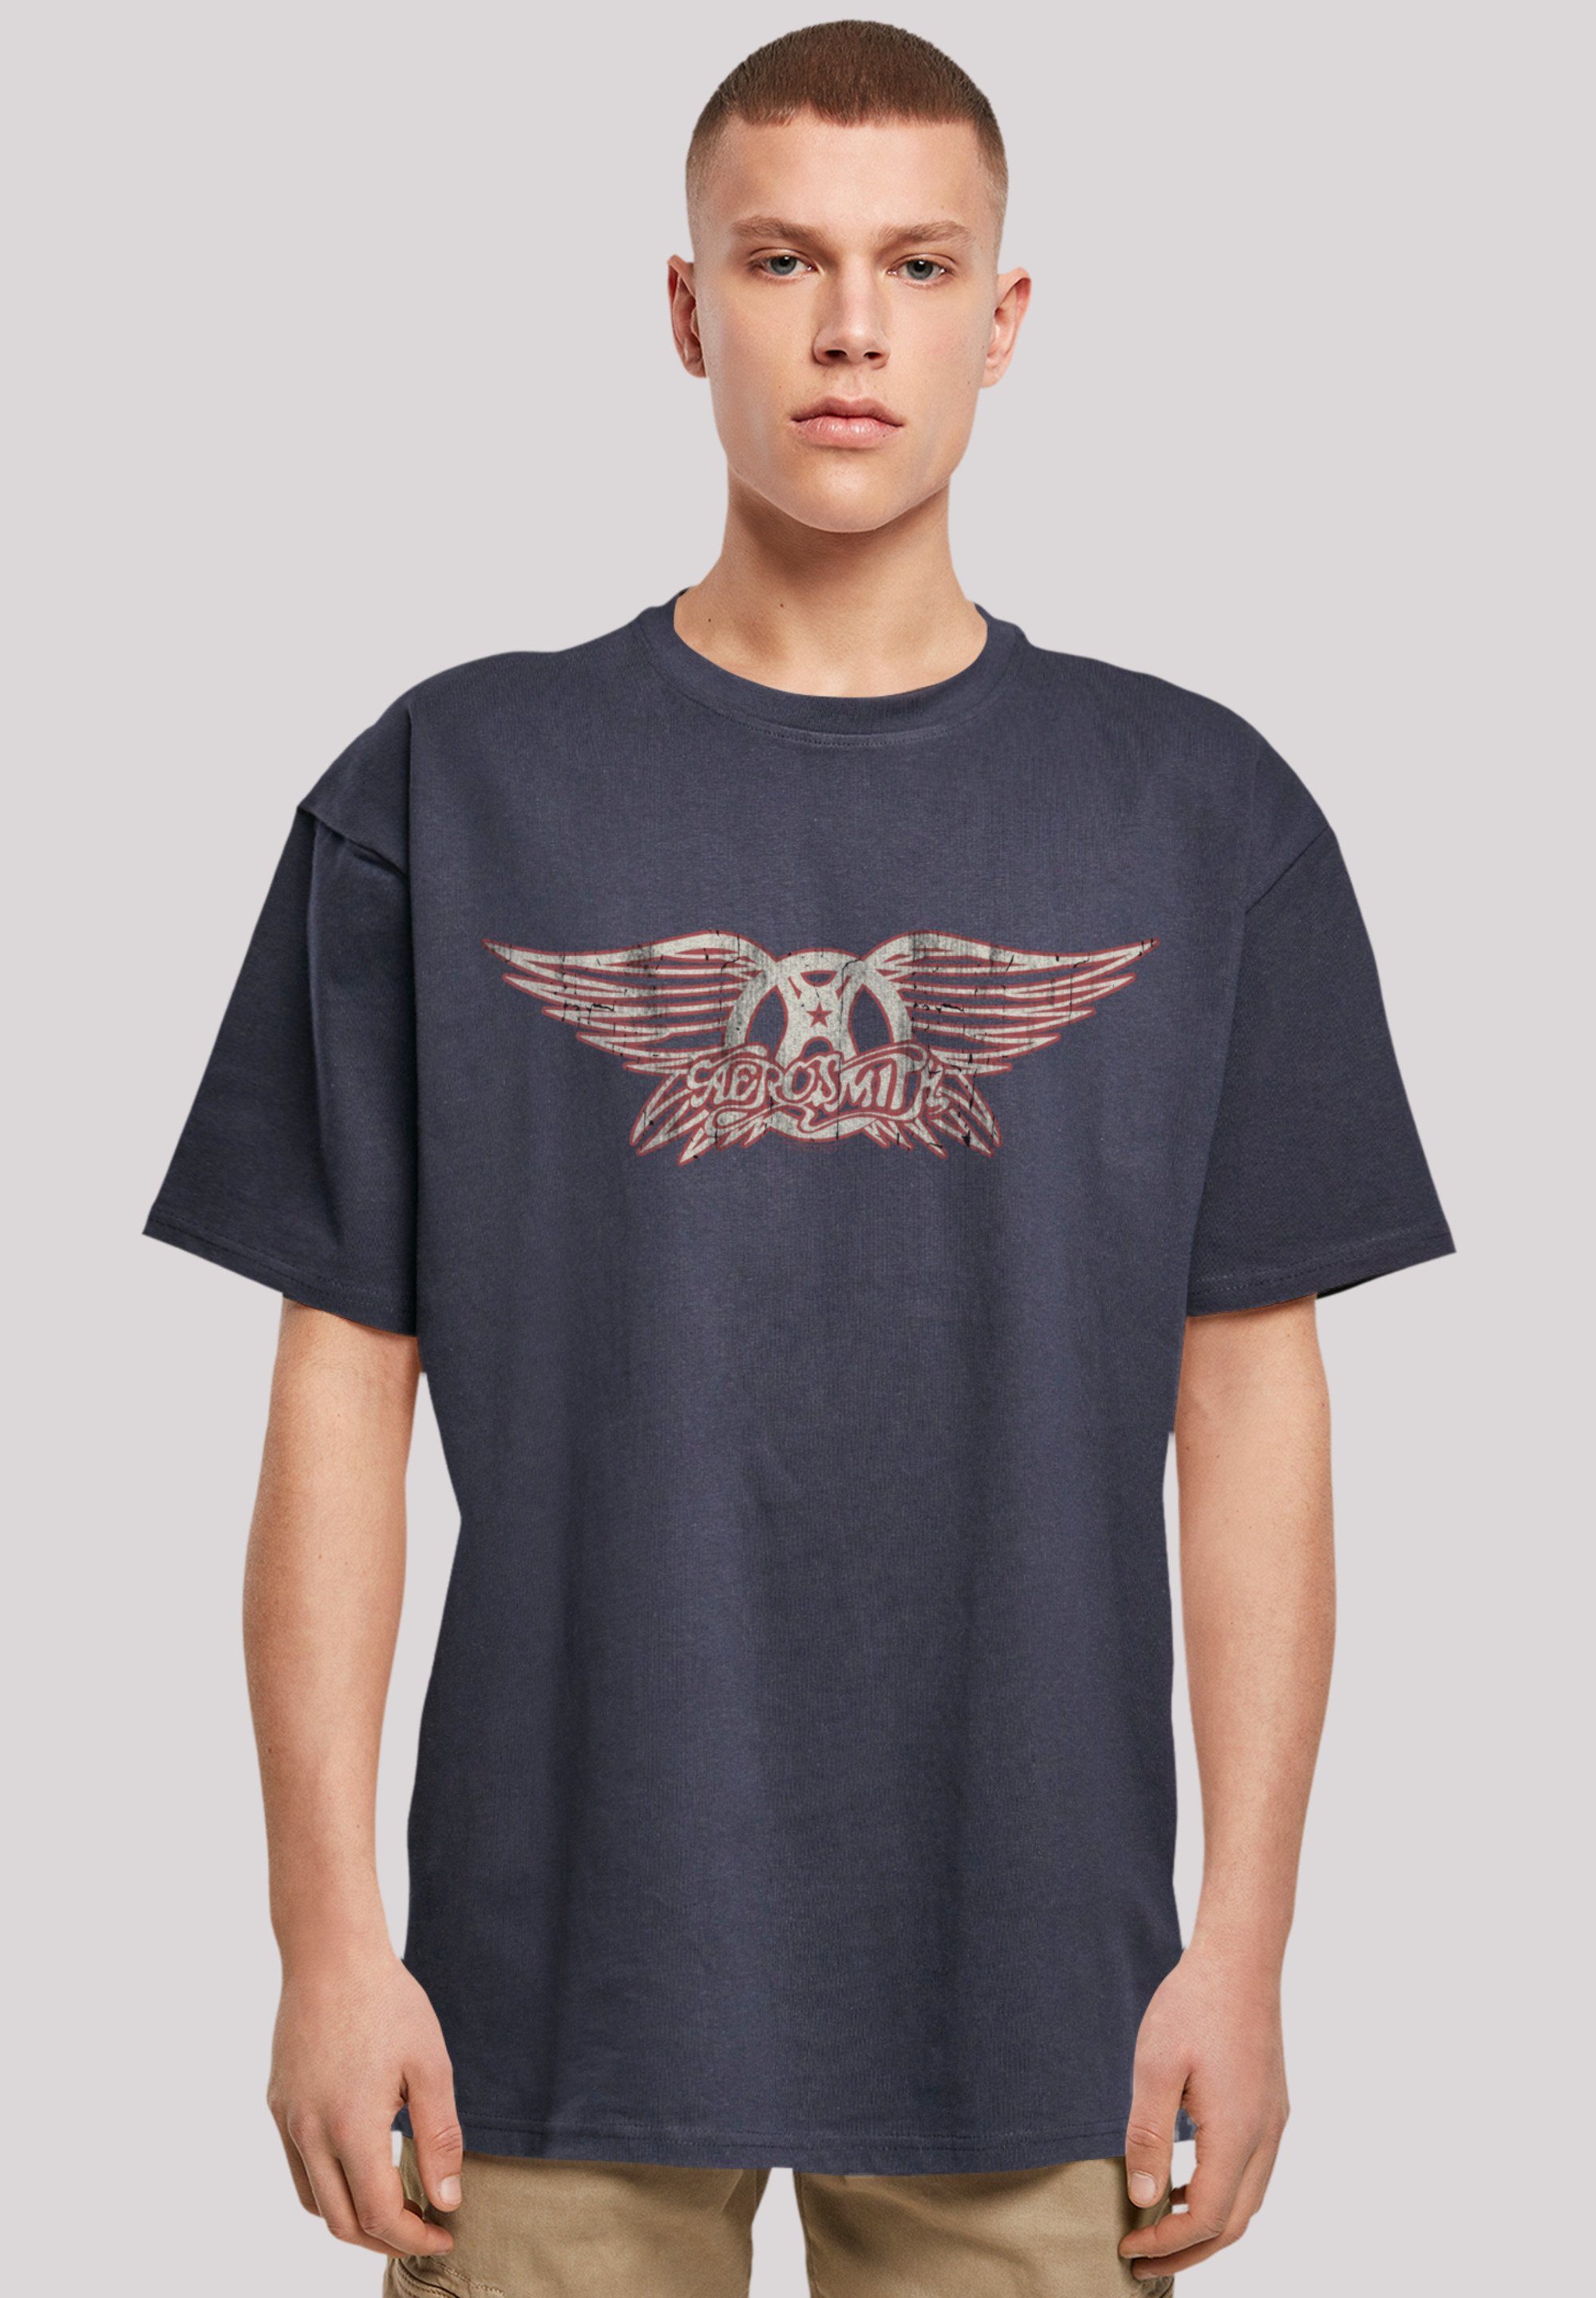 F4NT4STIC T-Shirt Aerosmith Rock Band Logo Premium Qualität, Rock-Musik, Band navy